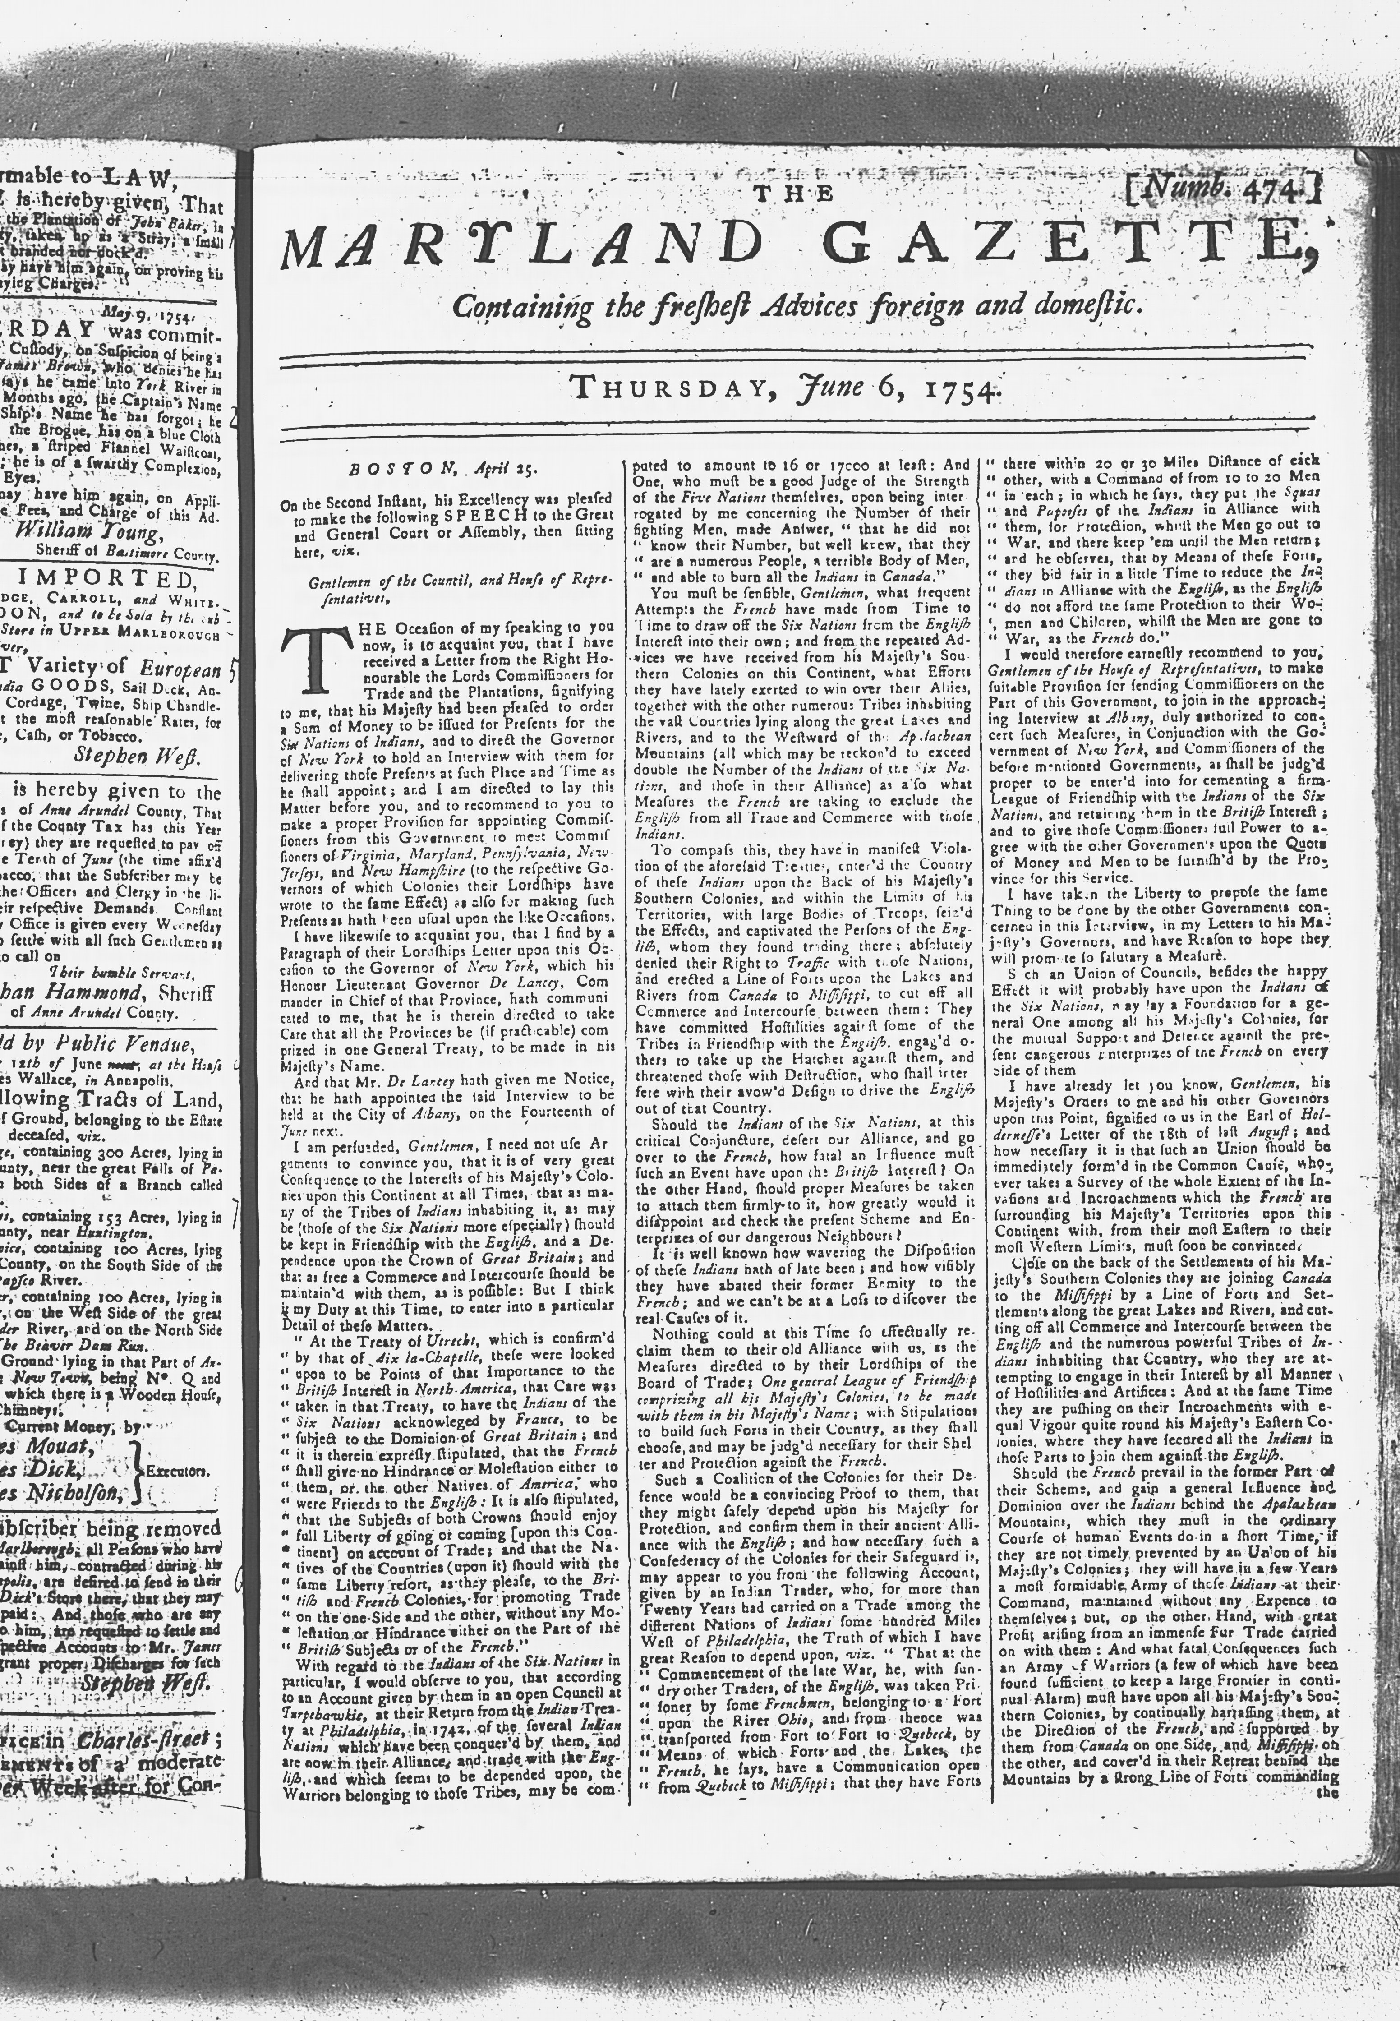 Maryland Gazette (MSA SC 2731), M1279, Image No 508